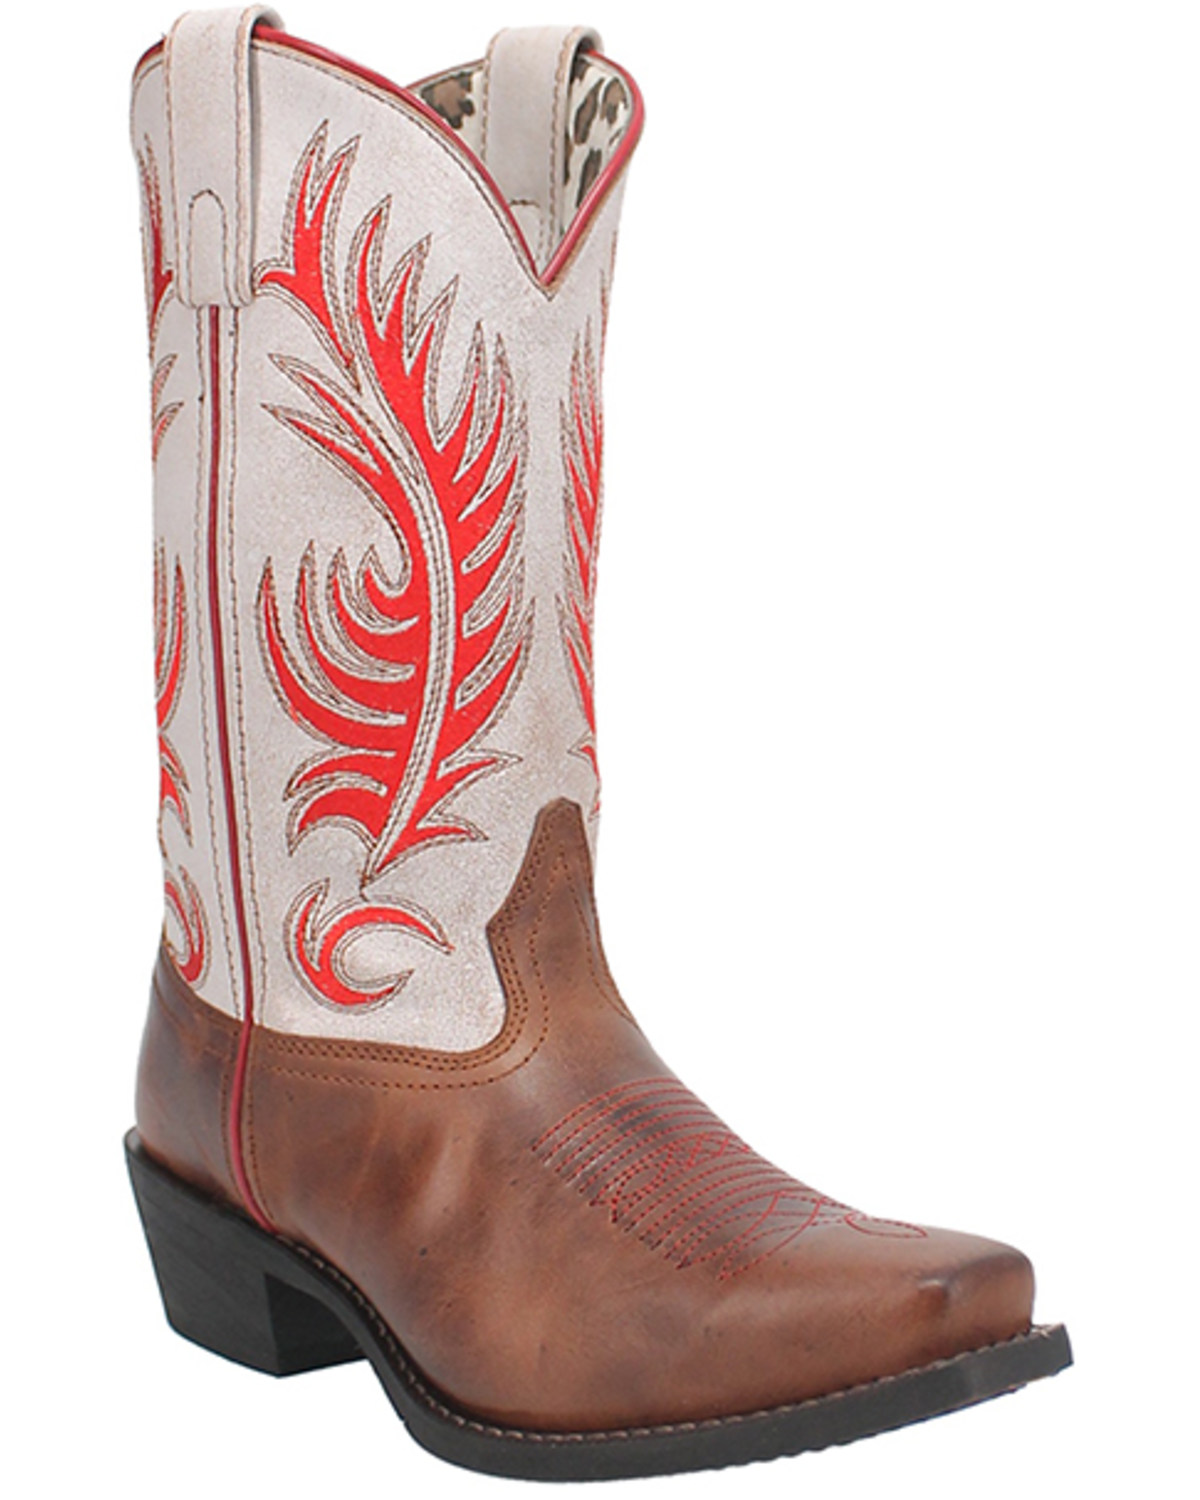 Laredo Women's Feather Love Western Boots - Square Toe